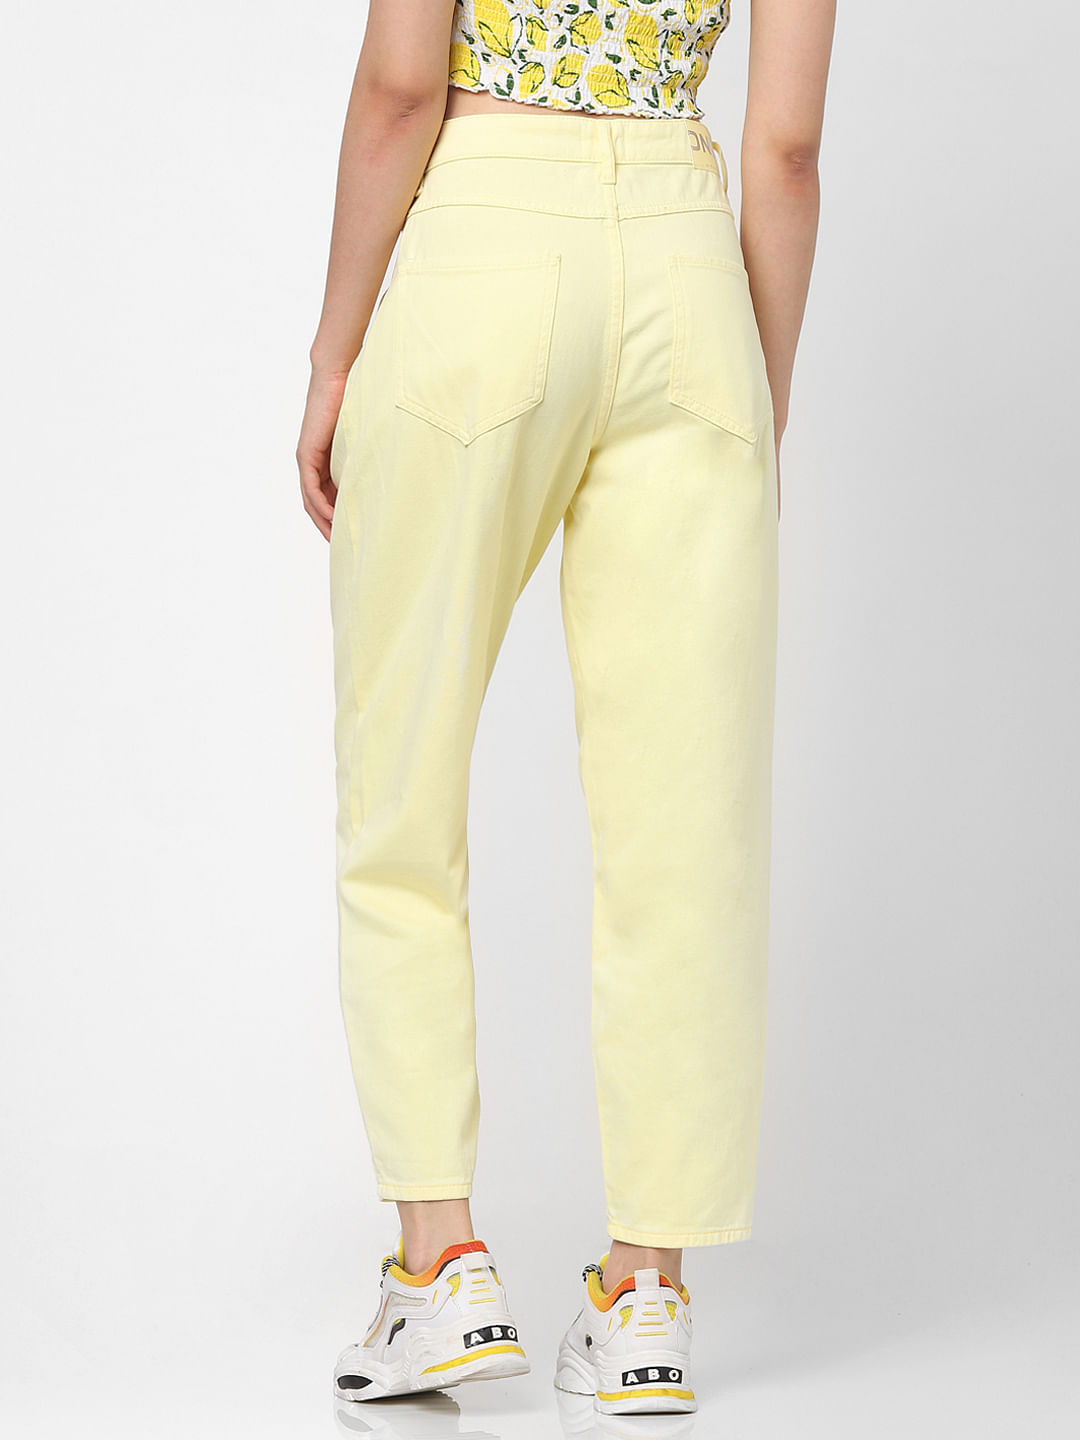 Light Yellow Colour Cotton Full Length Plazzo For Woman-LGPZC17